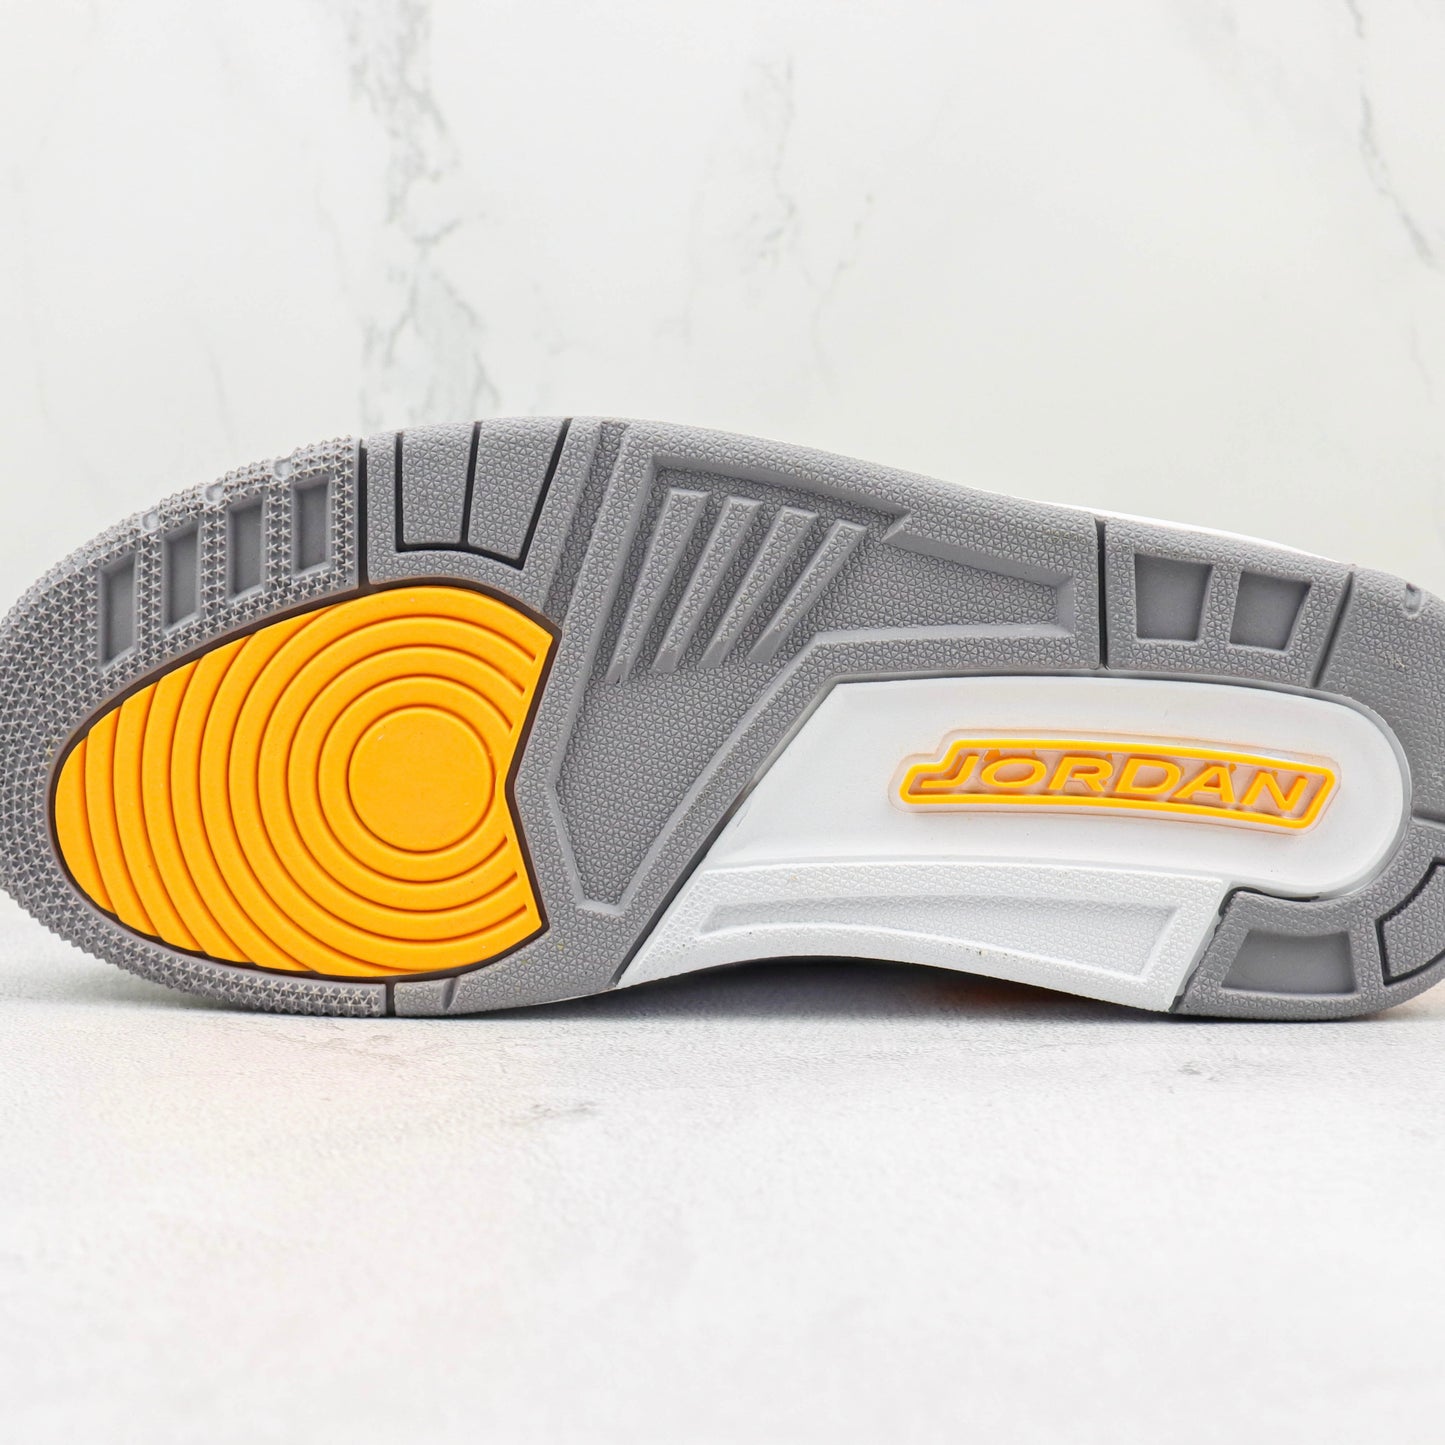 Jordan 3 Retro Laser Orange